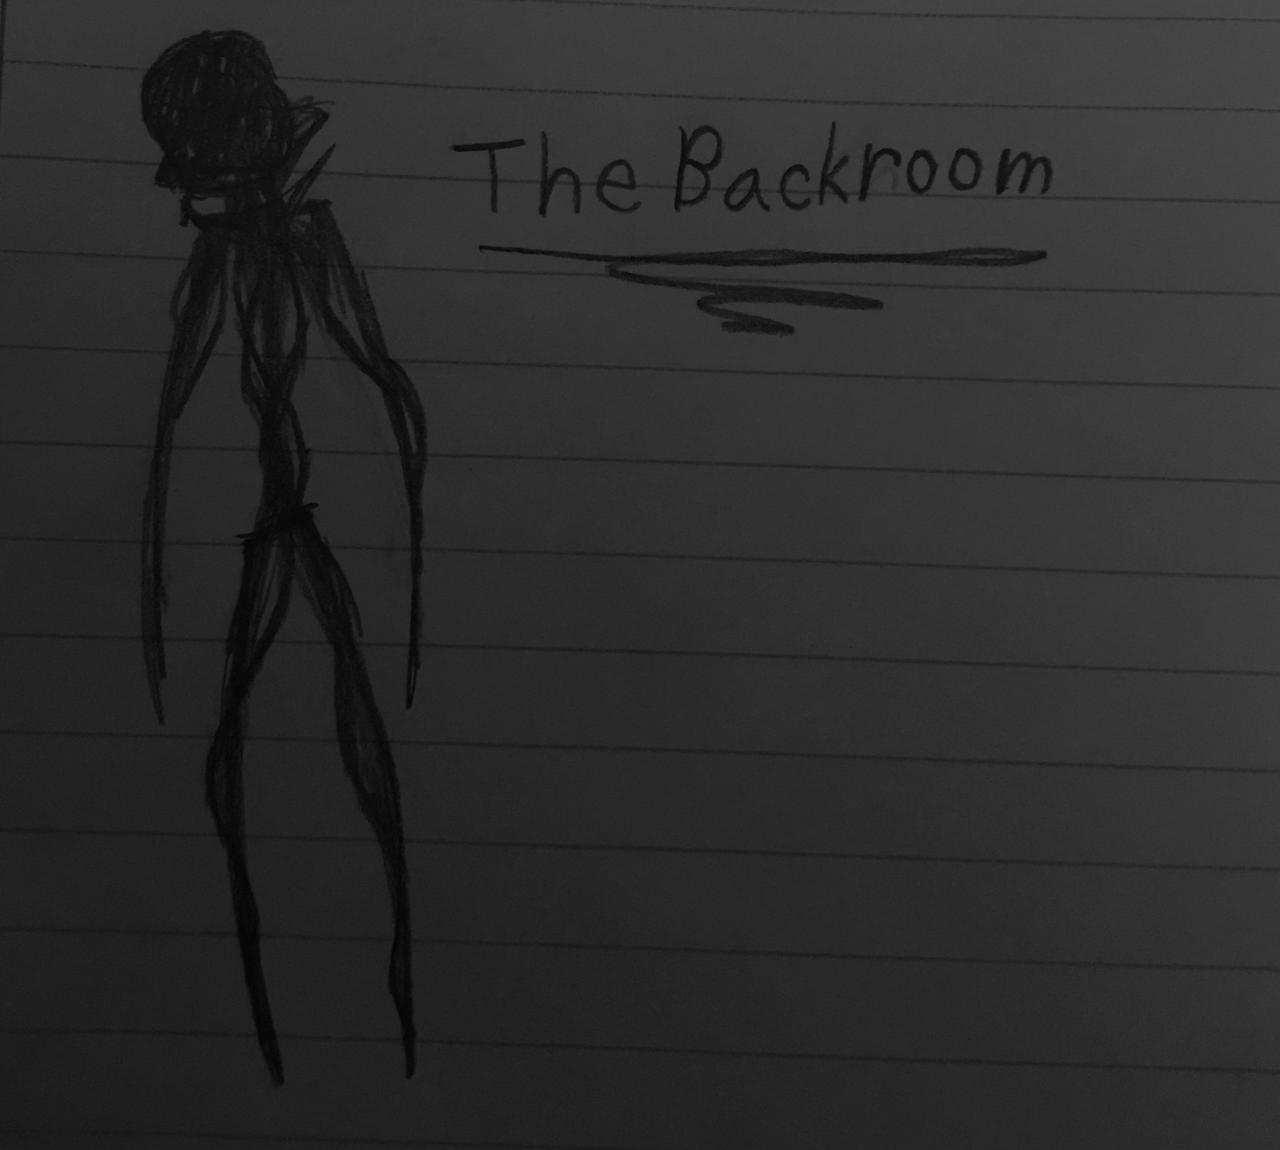 A backroom monster [video] by Blinkence on DeviantArt